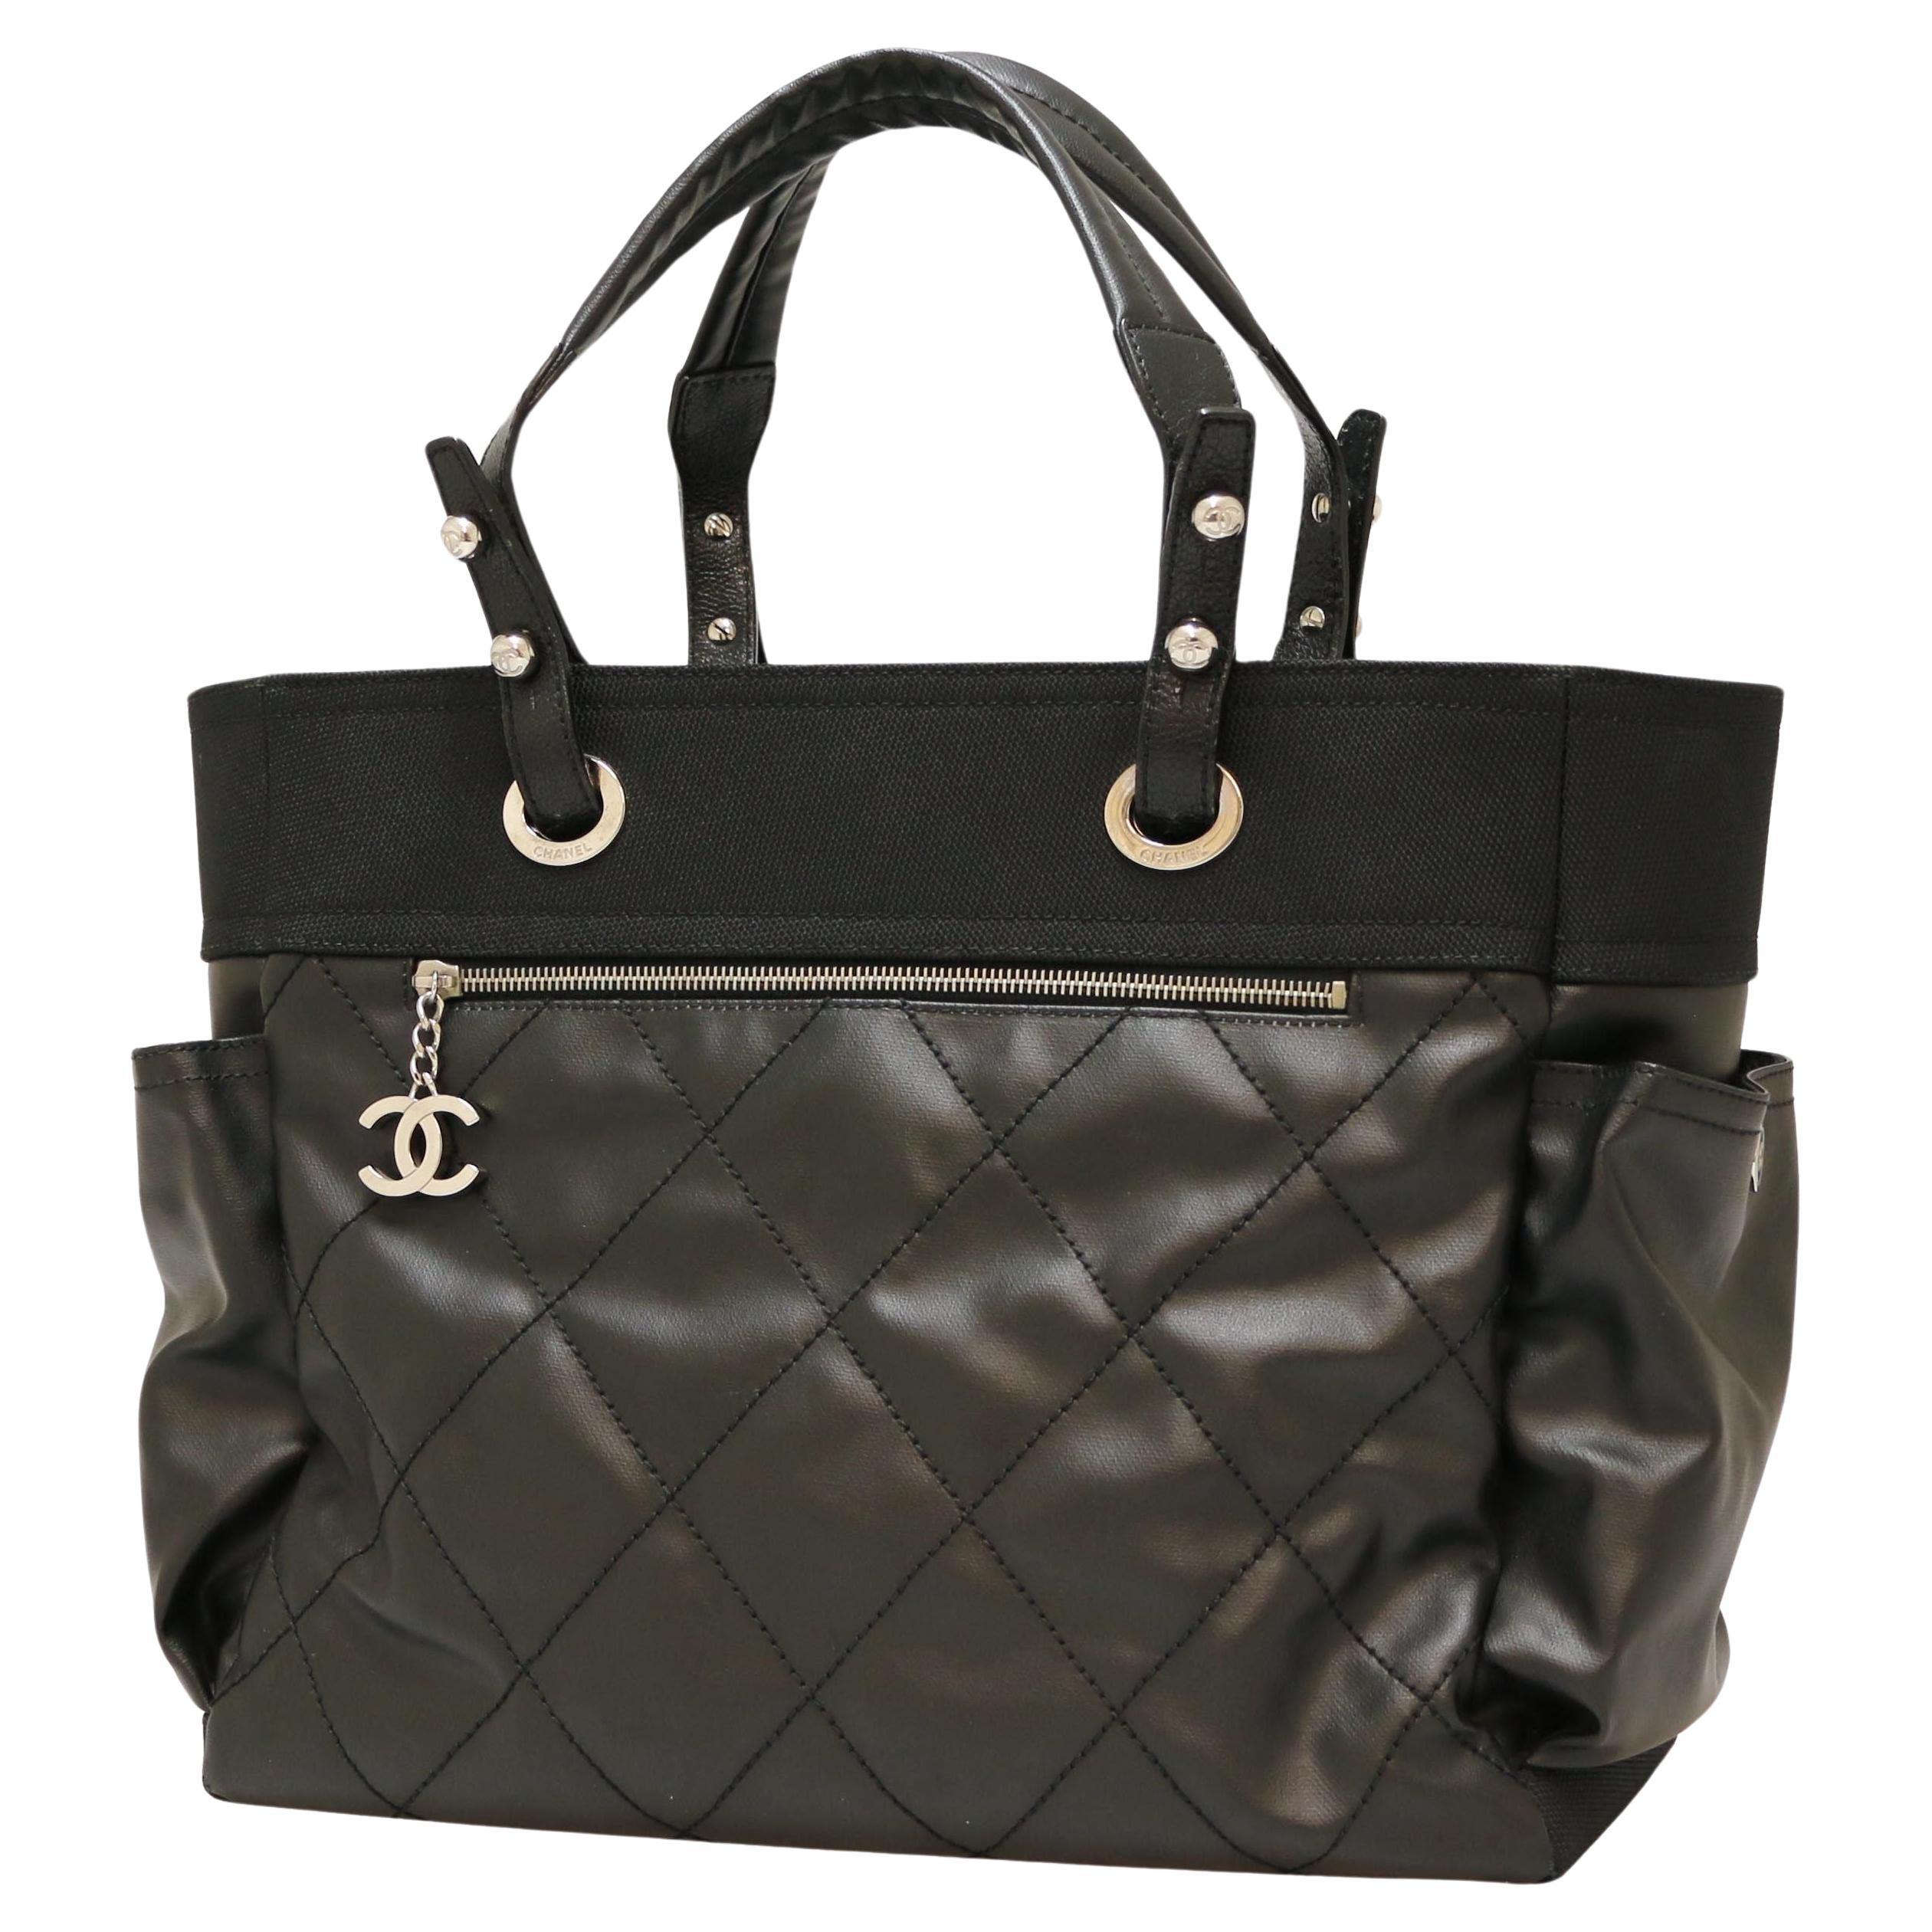 Chanel black tote bag For Sale